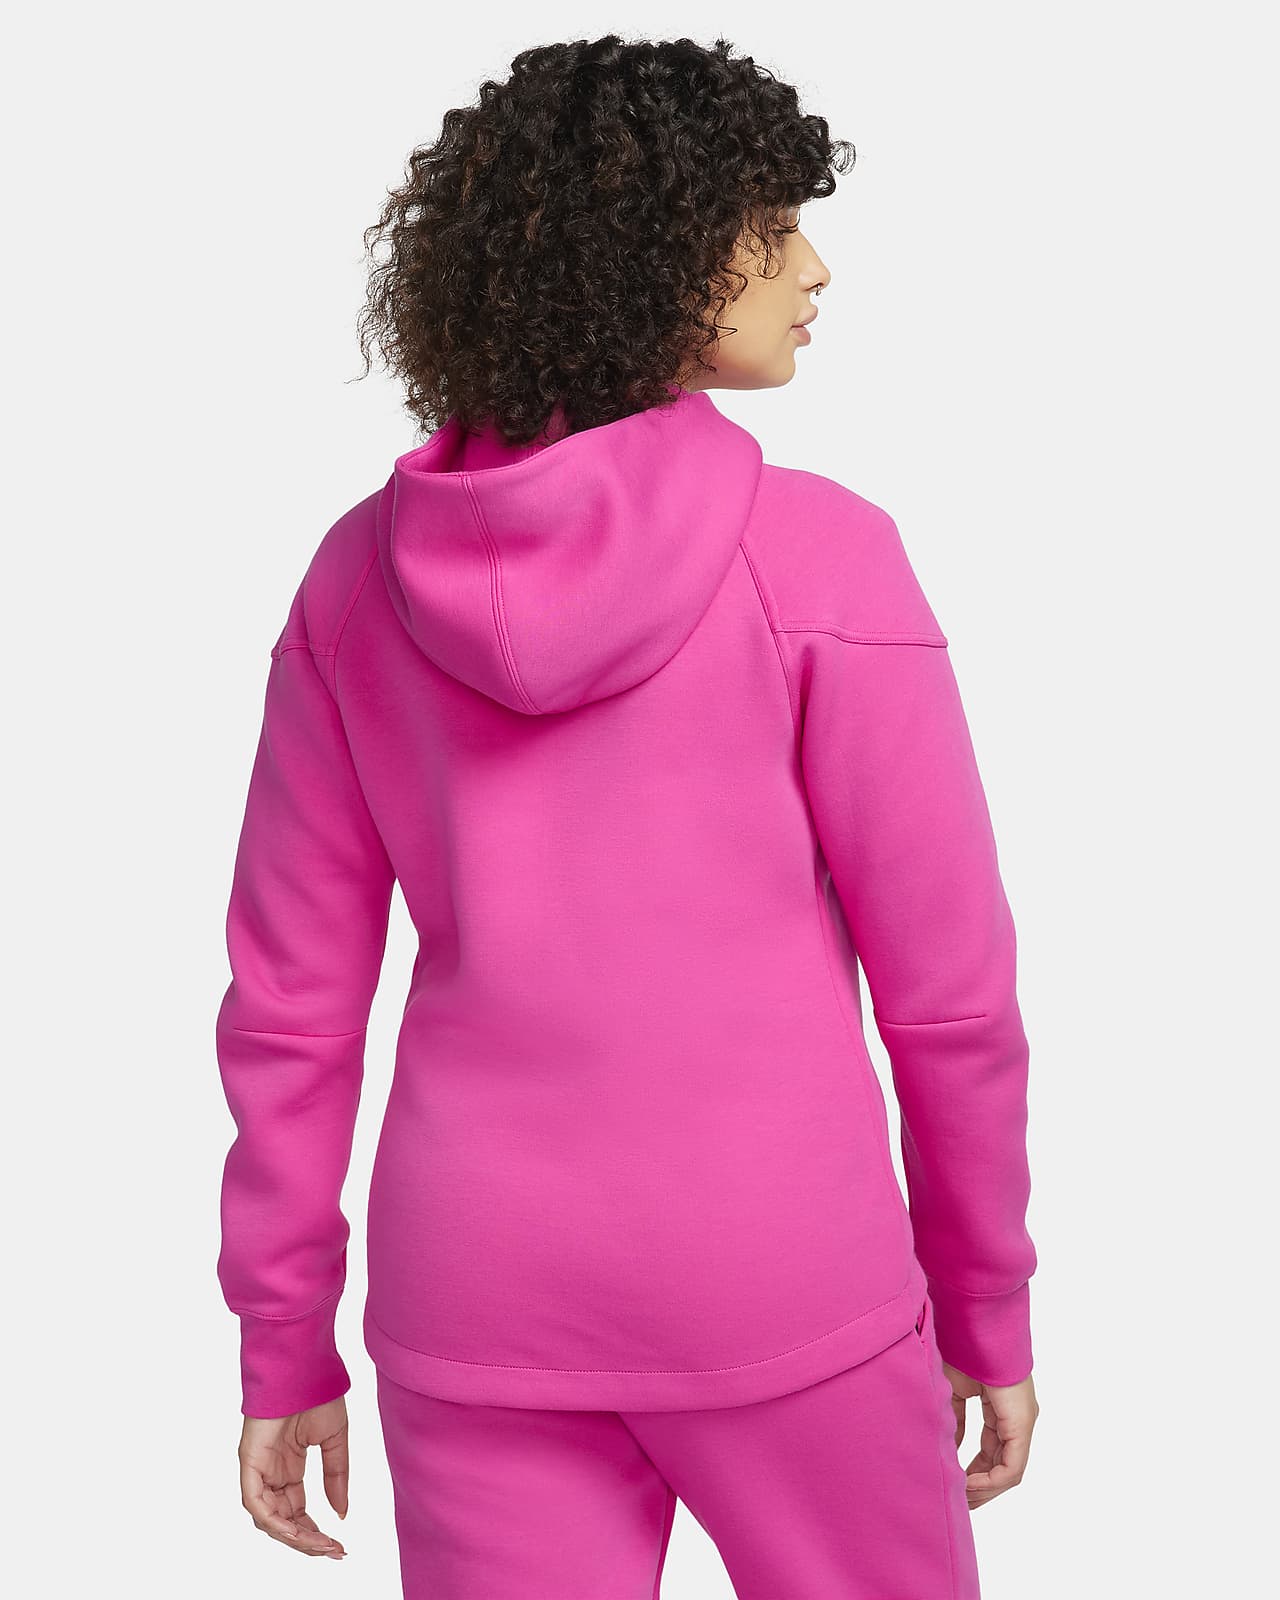 Nike Tech Fleece Full Zip Womens Active Hoodies Size XL, Color: Light  Blue/White 